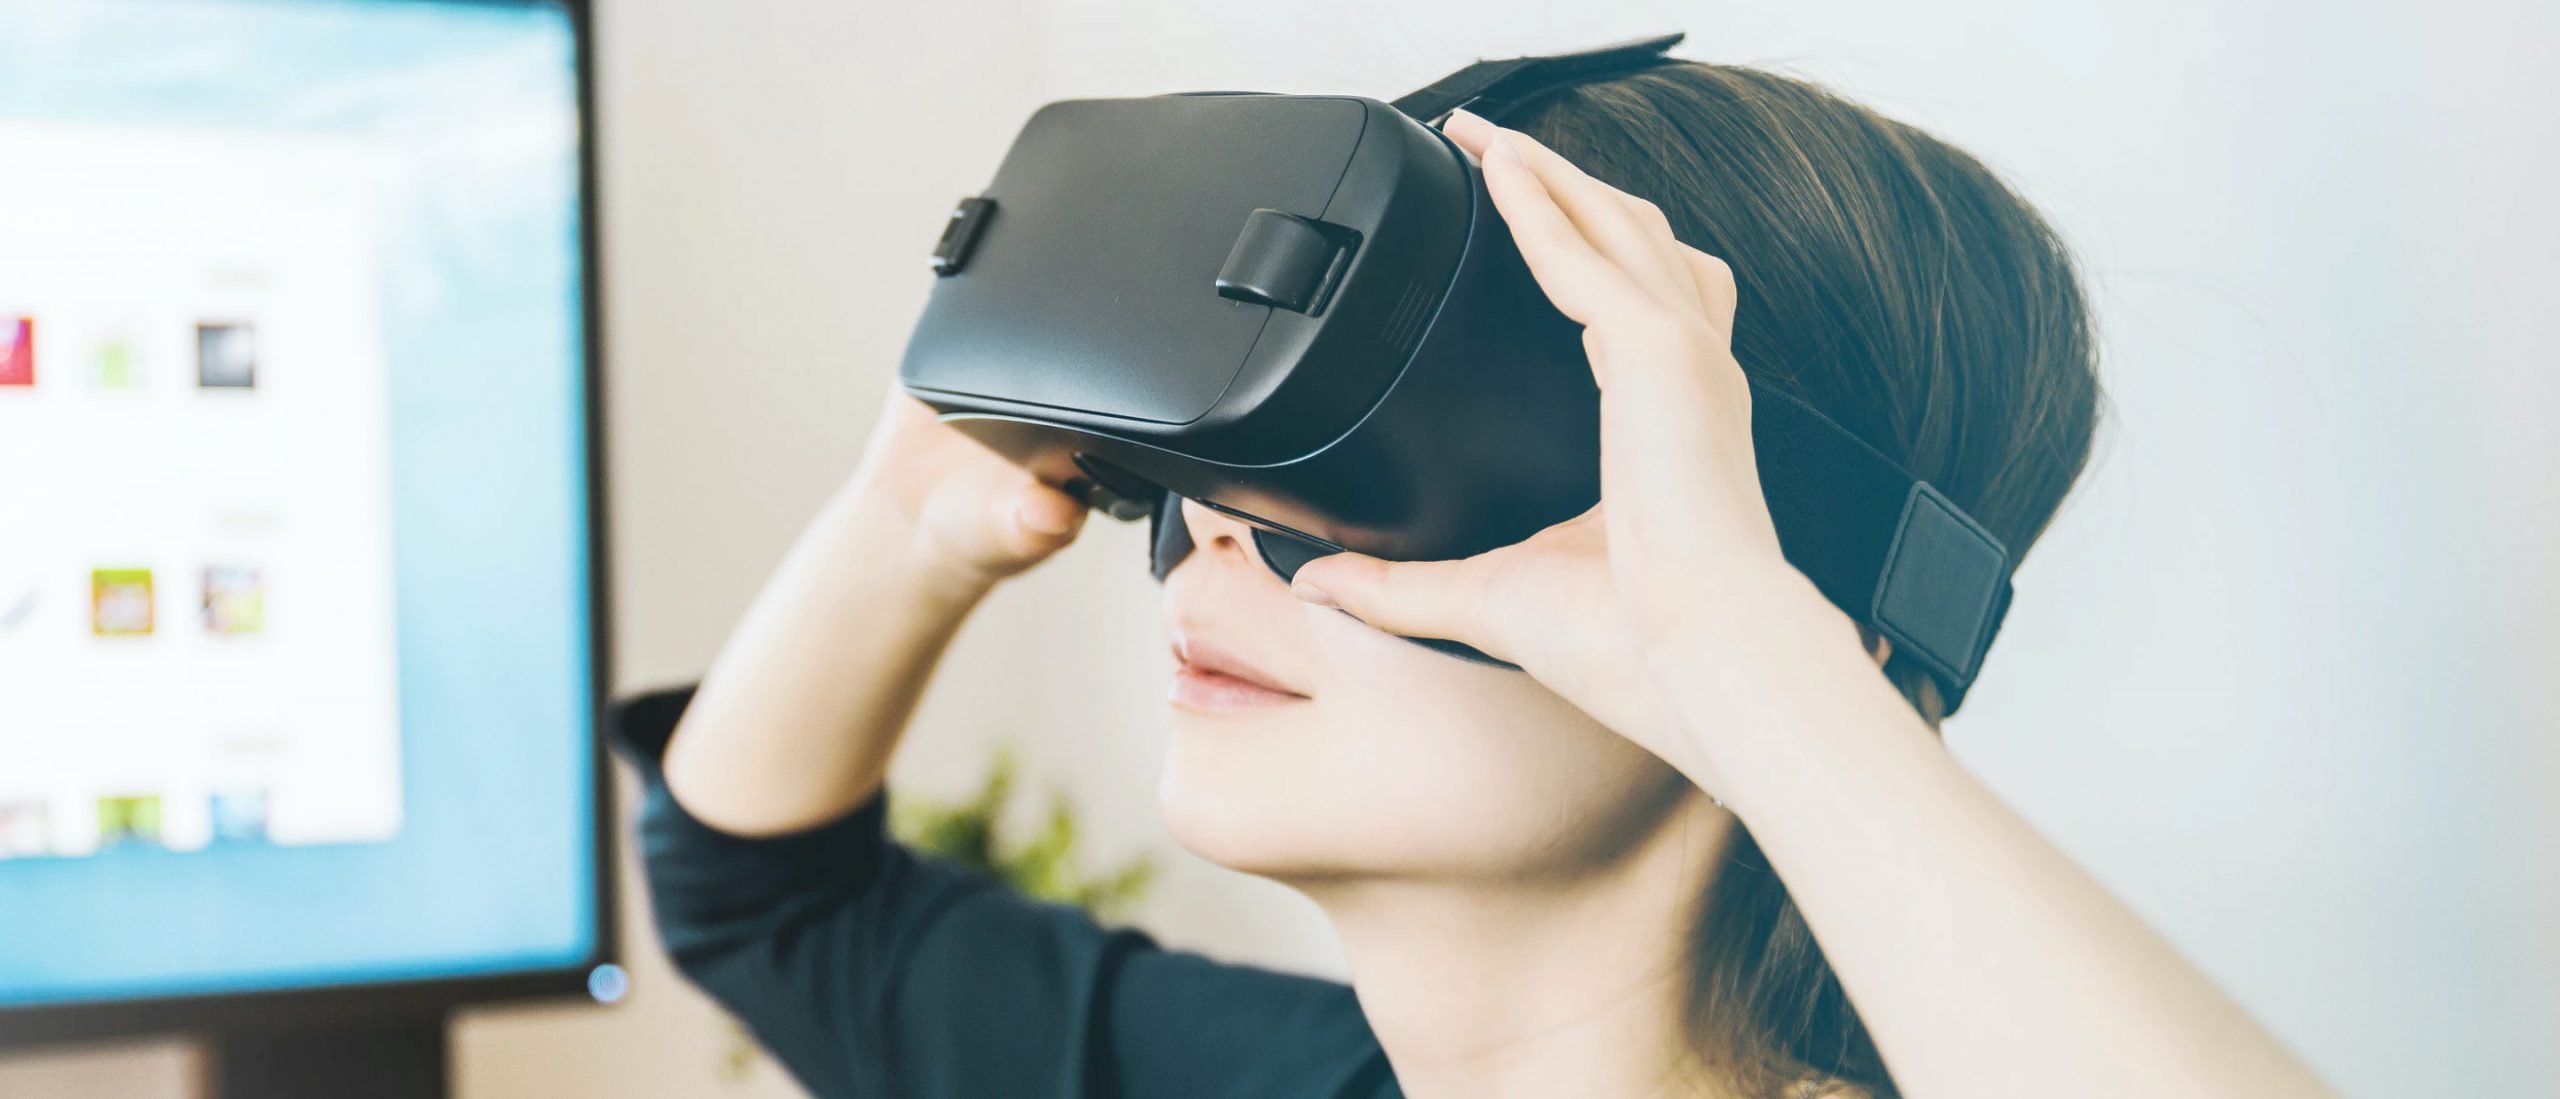 Очки ВИЗИОН VR. Девушка в VR очках. Как подключить VR очки к телефону. Virtual reality.